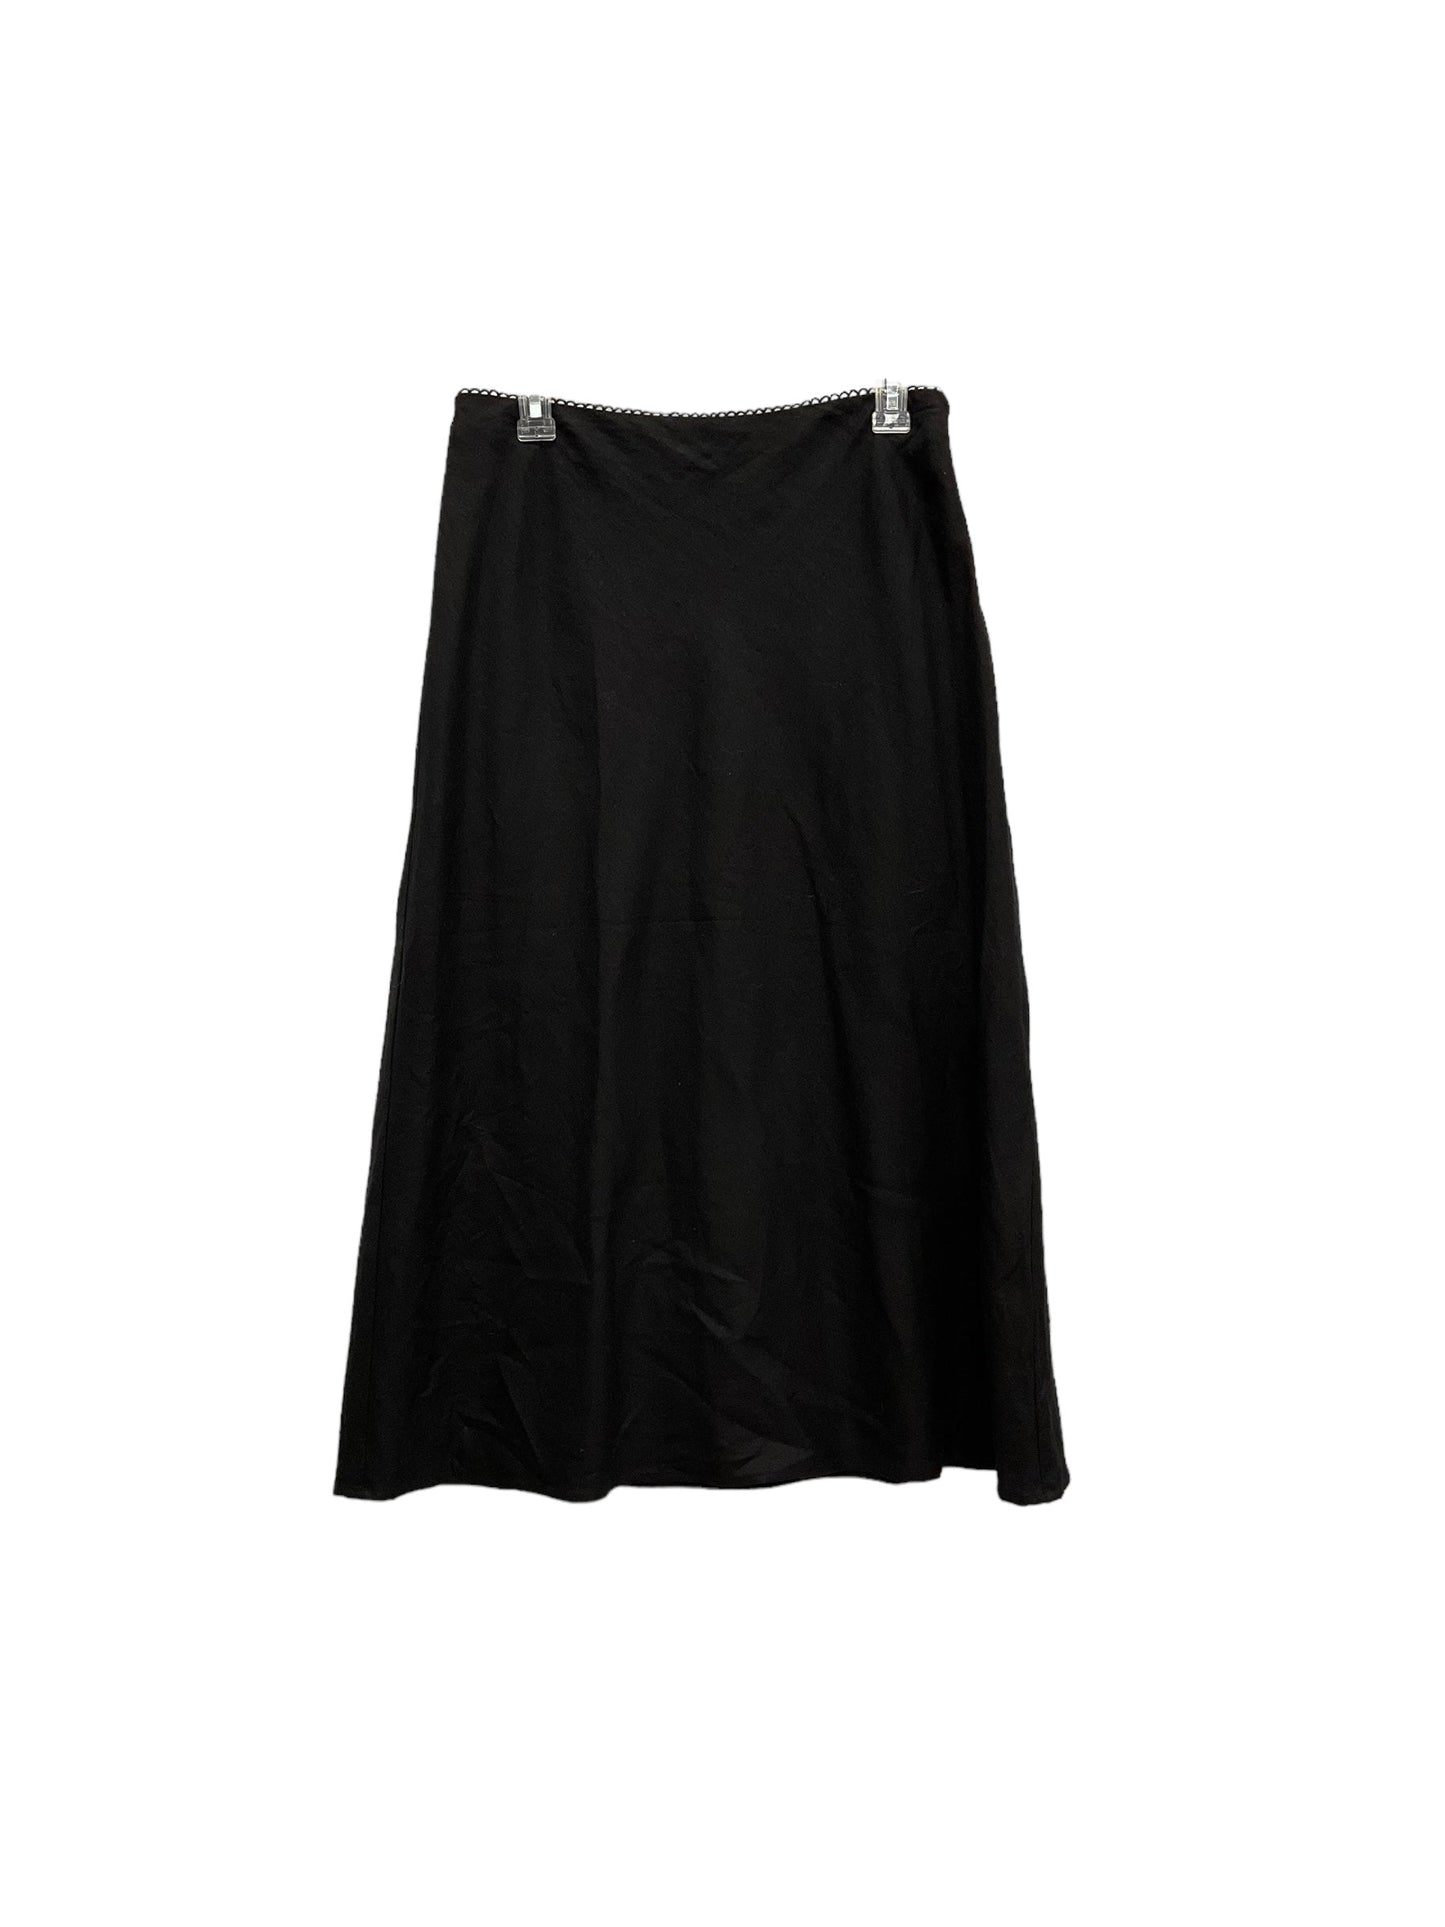 Black Skirt Maxi Joie, Size 10